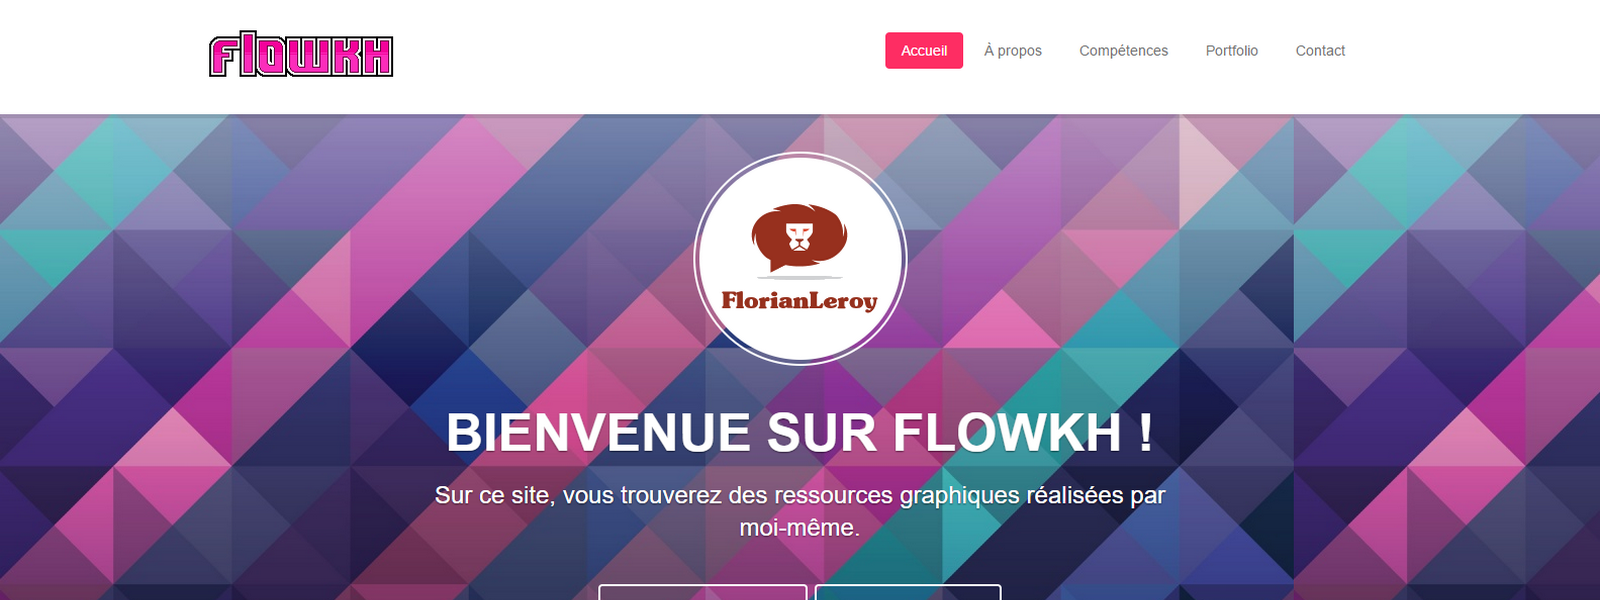 Flowkh - développé par Florian LEROY